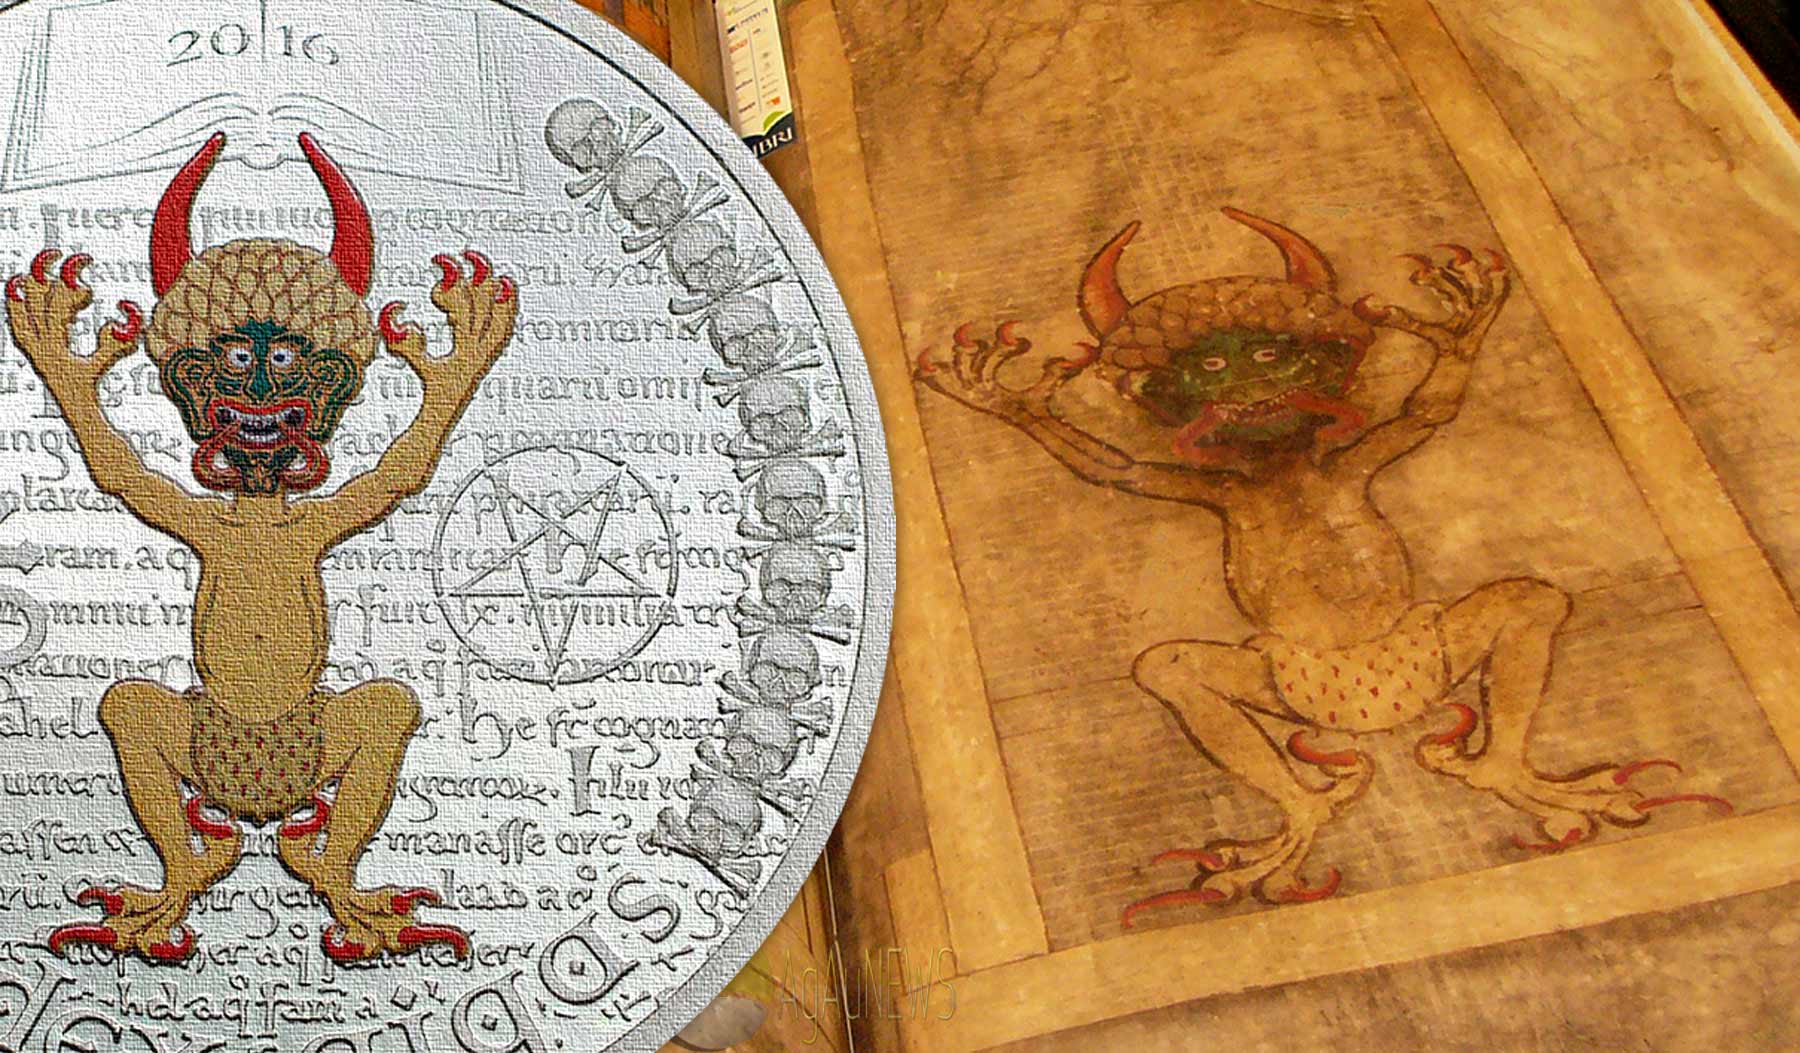 Huge Medieval Megabook The Codex Gigas Is The First Dark Side